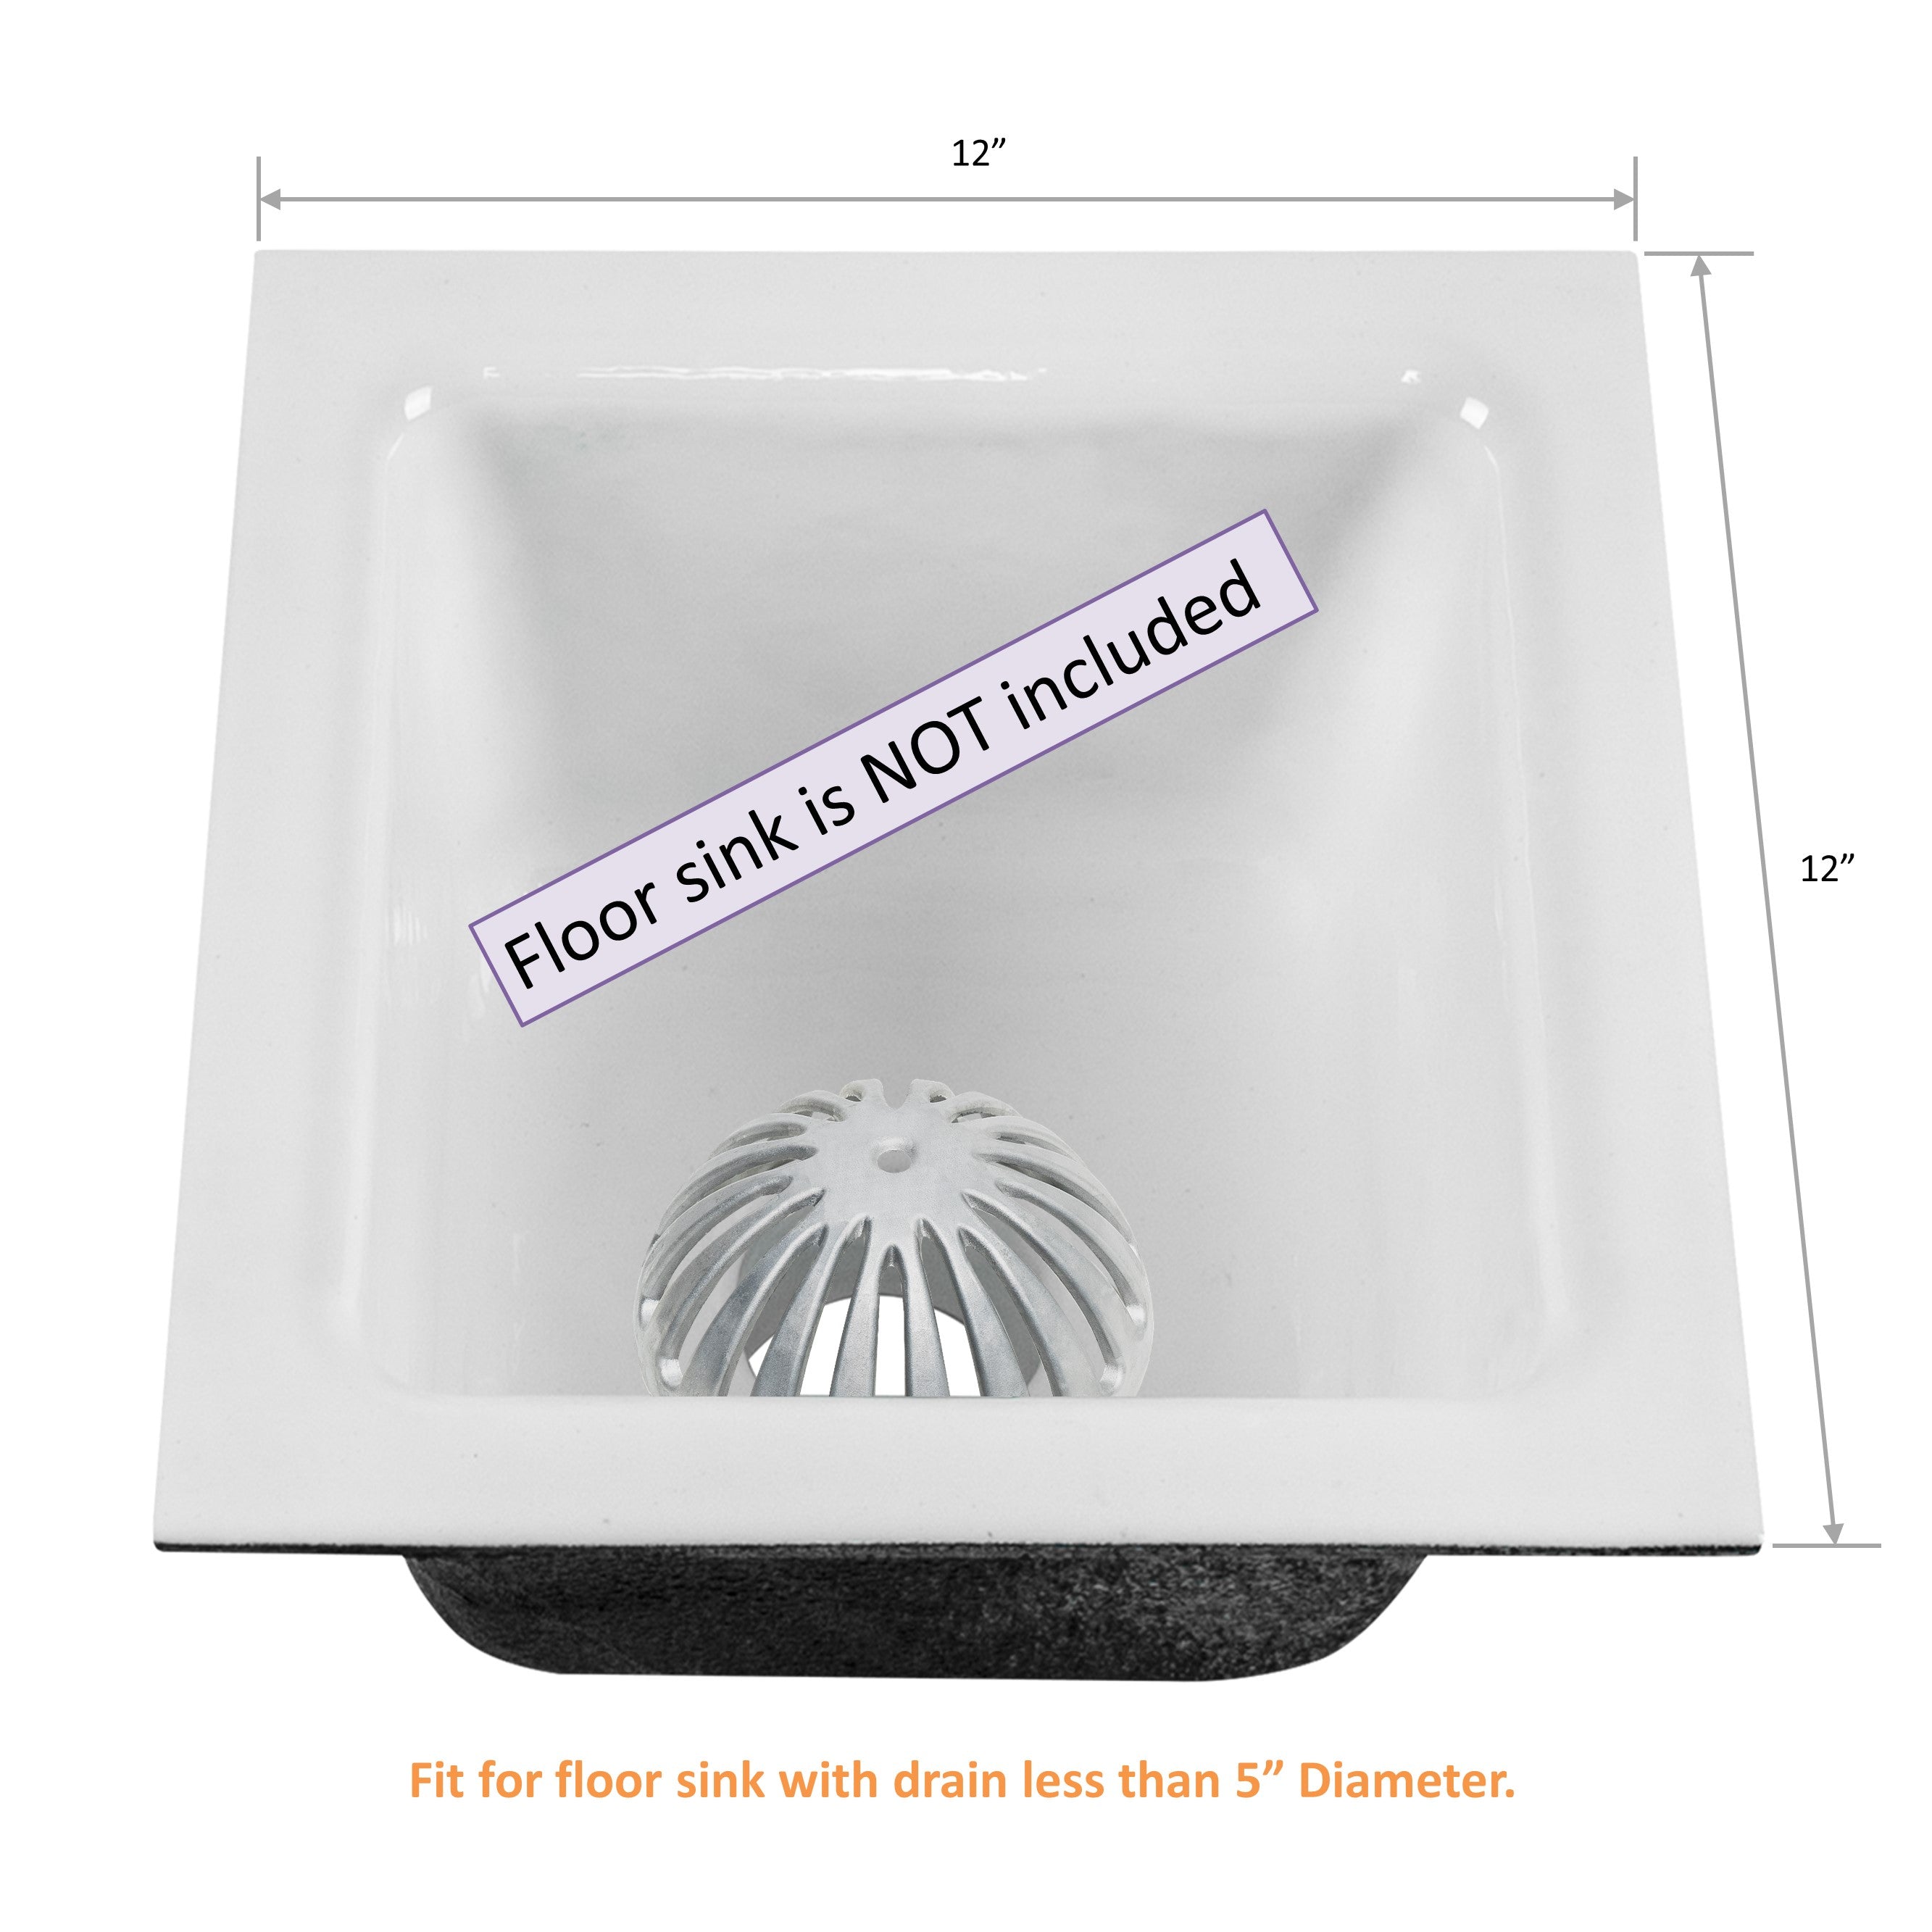 Leyso Aluminum Dome Strainer for 12" Floor Sink, 5-1/4" Diameter - Perfect for Restaurant, Bar, Buffet